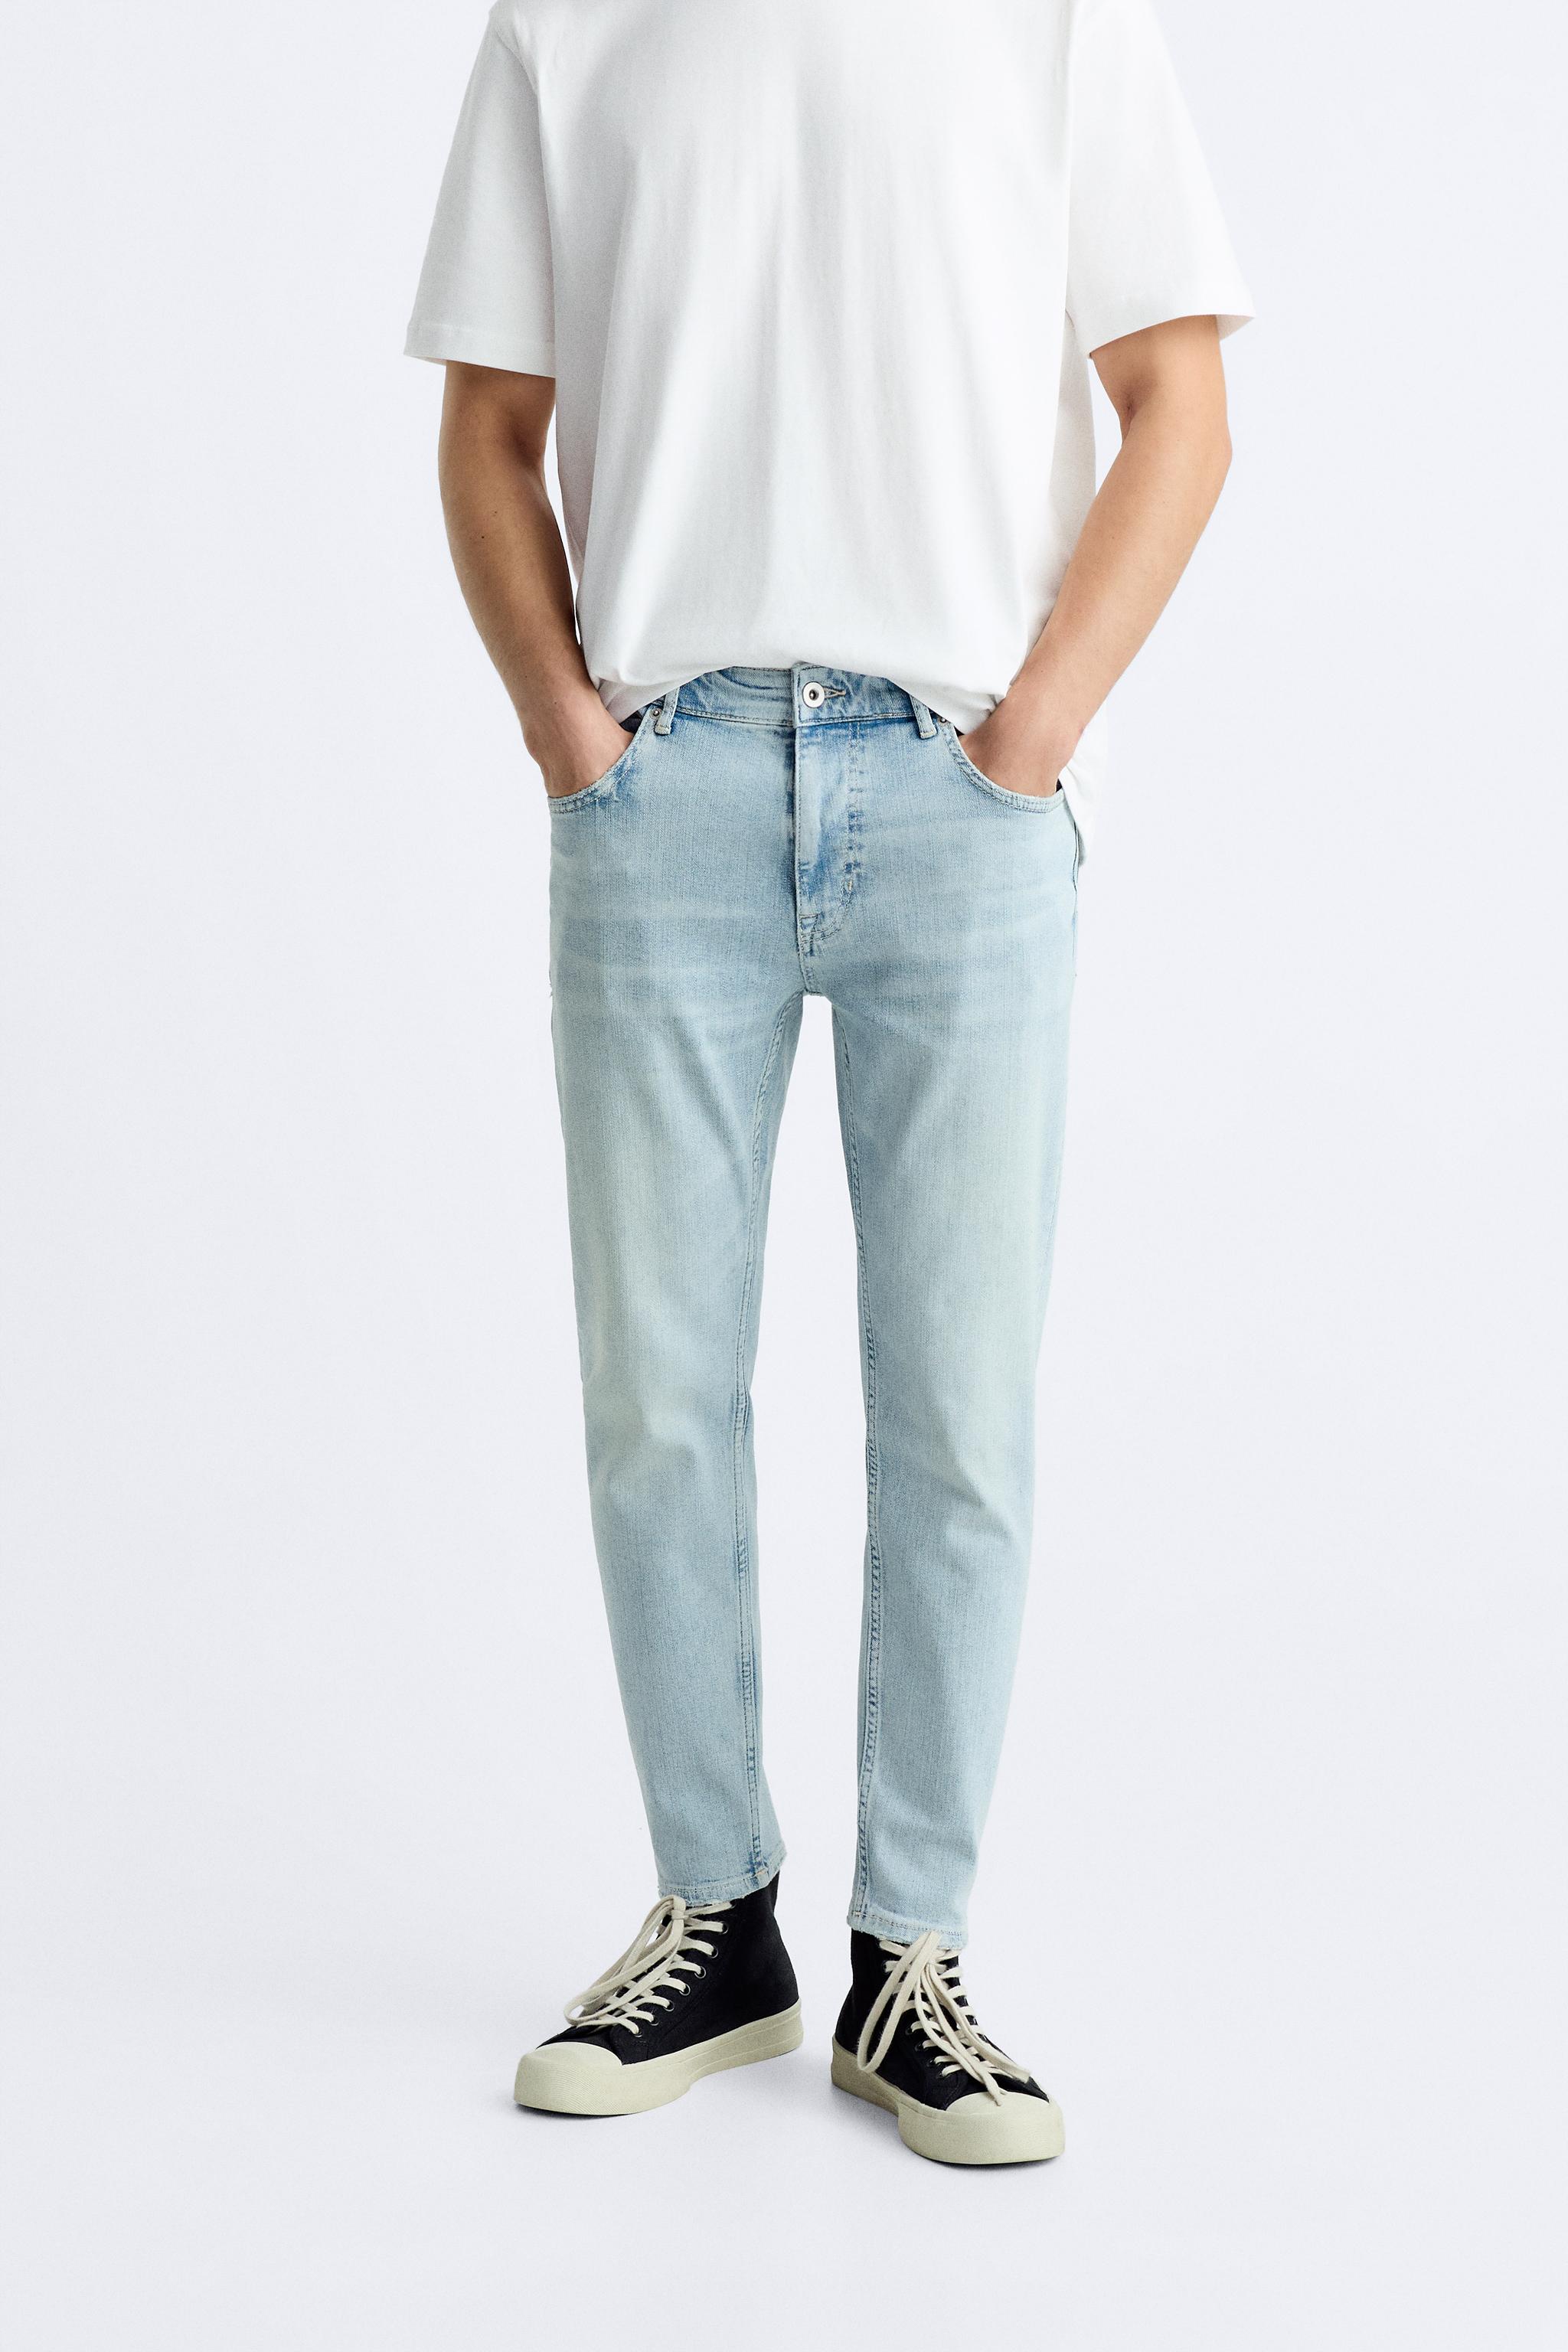 Men's Super Skinny Jeans, Explore our New Arrivals